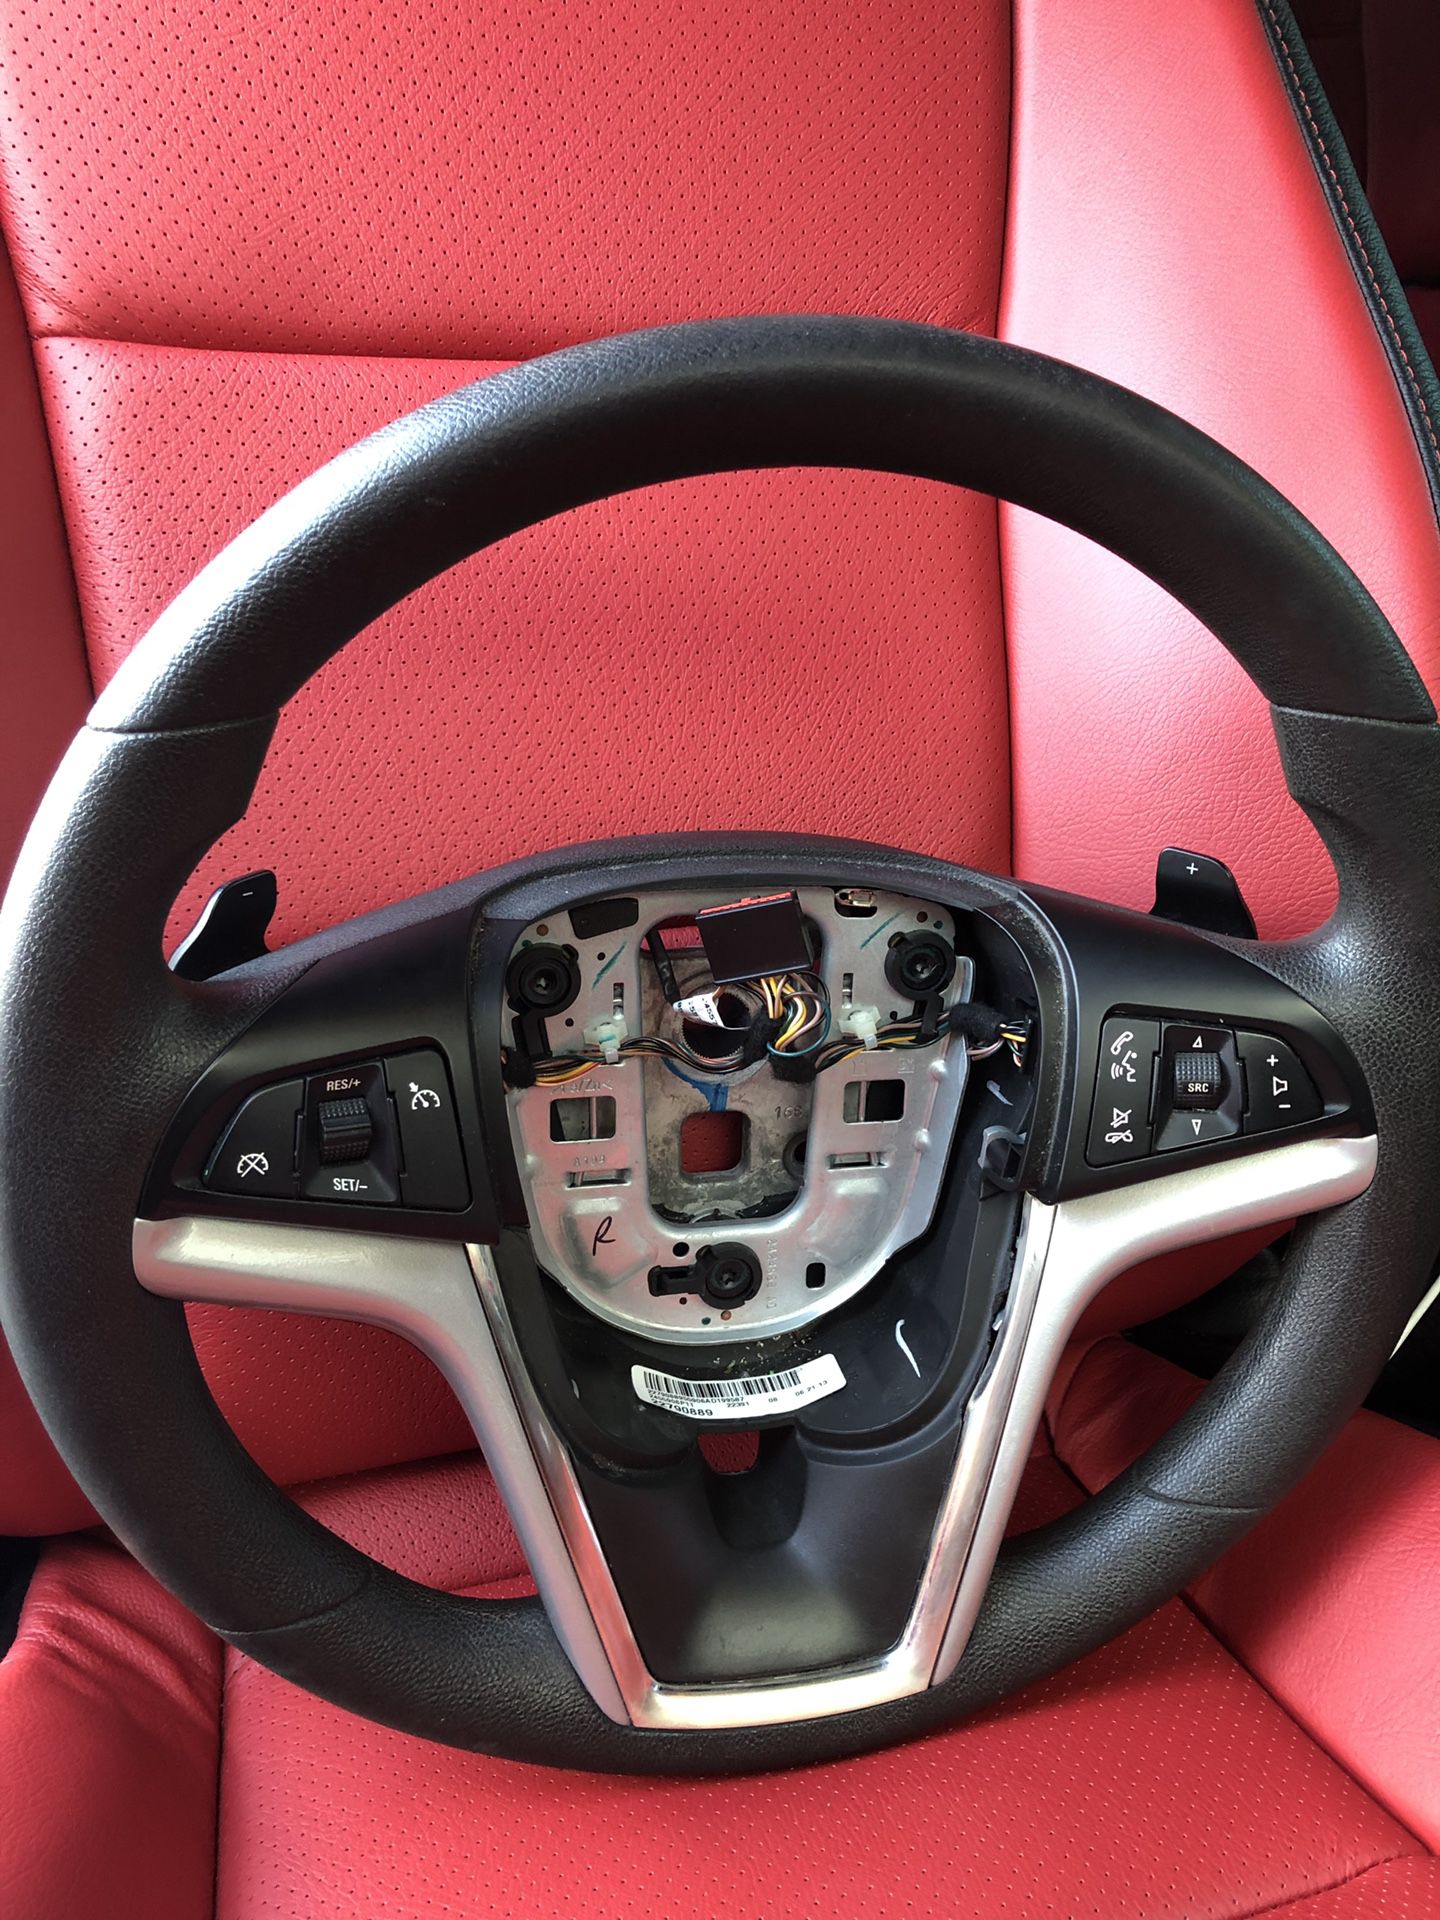 2014 camaro steering wheel with controls nice conditions